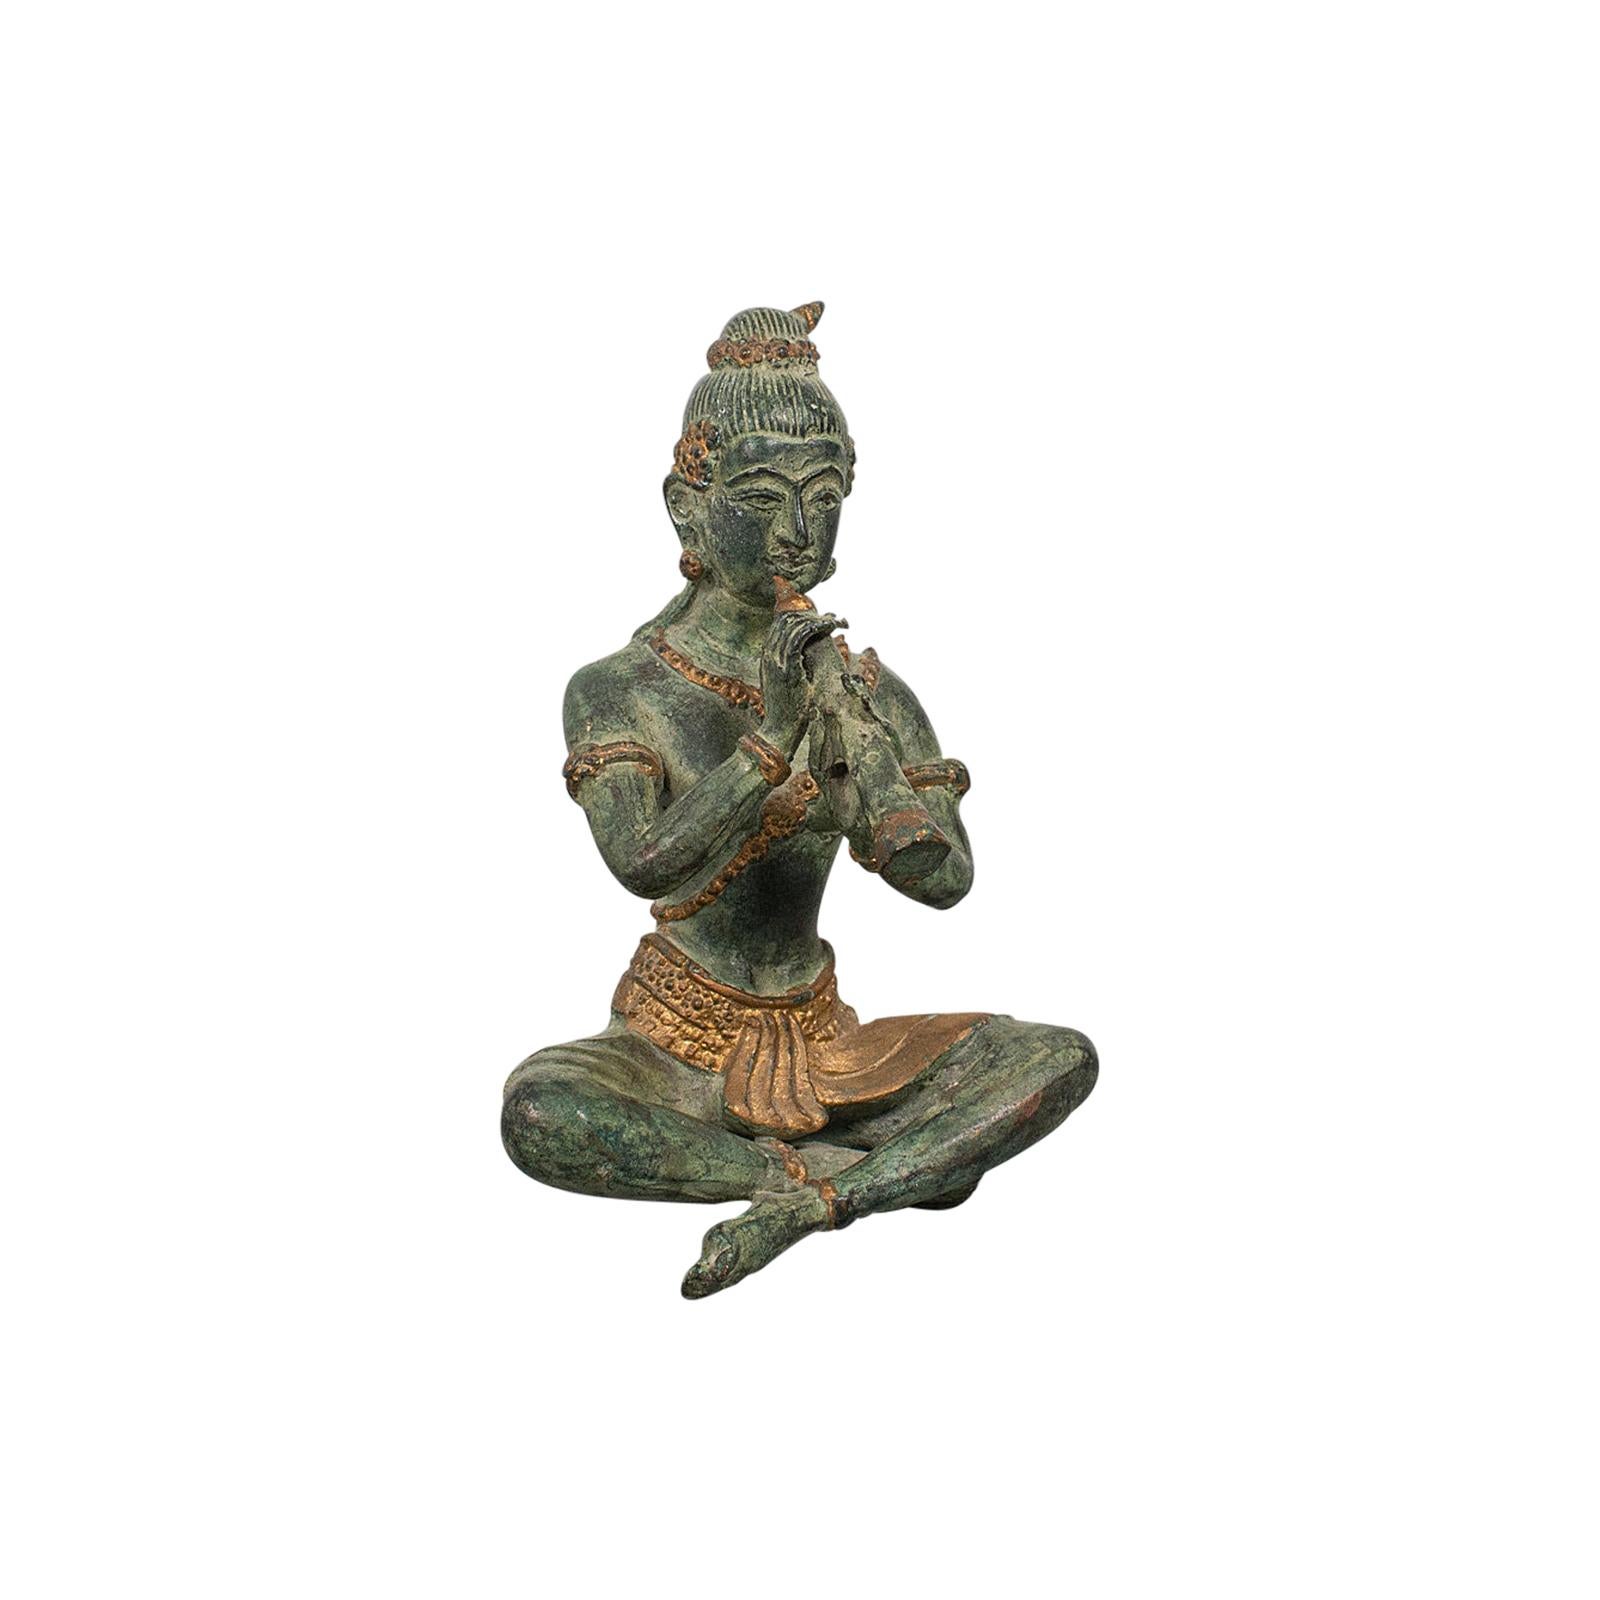 Antique Decorative Figure, Oriental, Bronze, Statue, Study, Musician, circa 1900